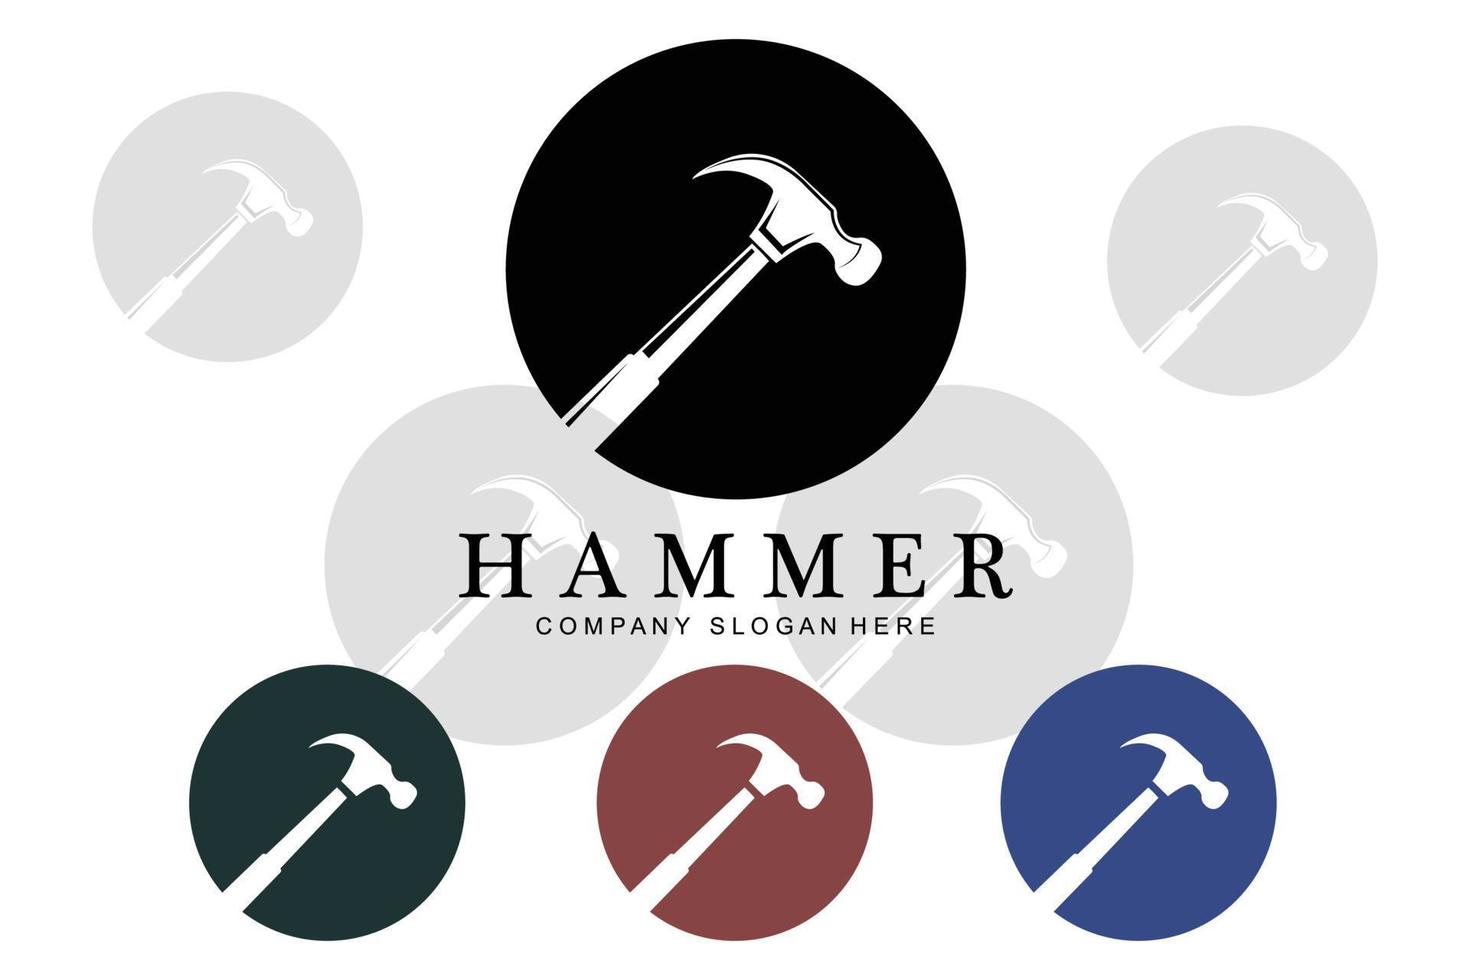 Hammer, Bauwerkzeuge und Richter-Logo-Vektorsymbol, Vintage-Retro-Design-Illustration vektor